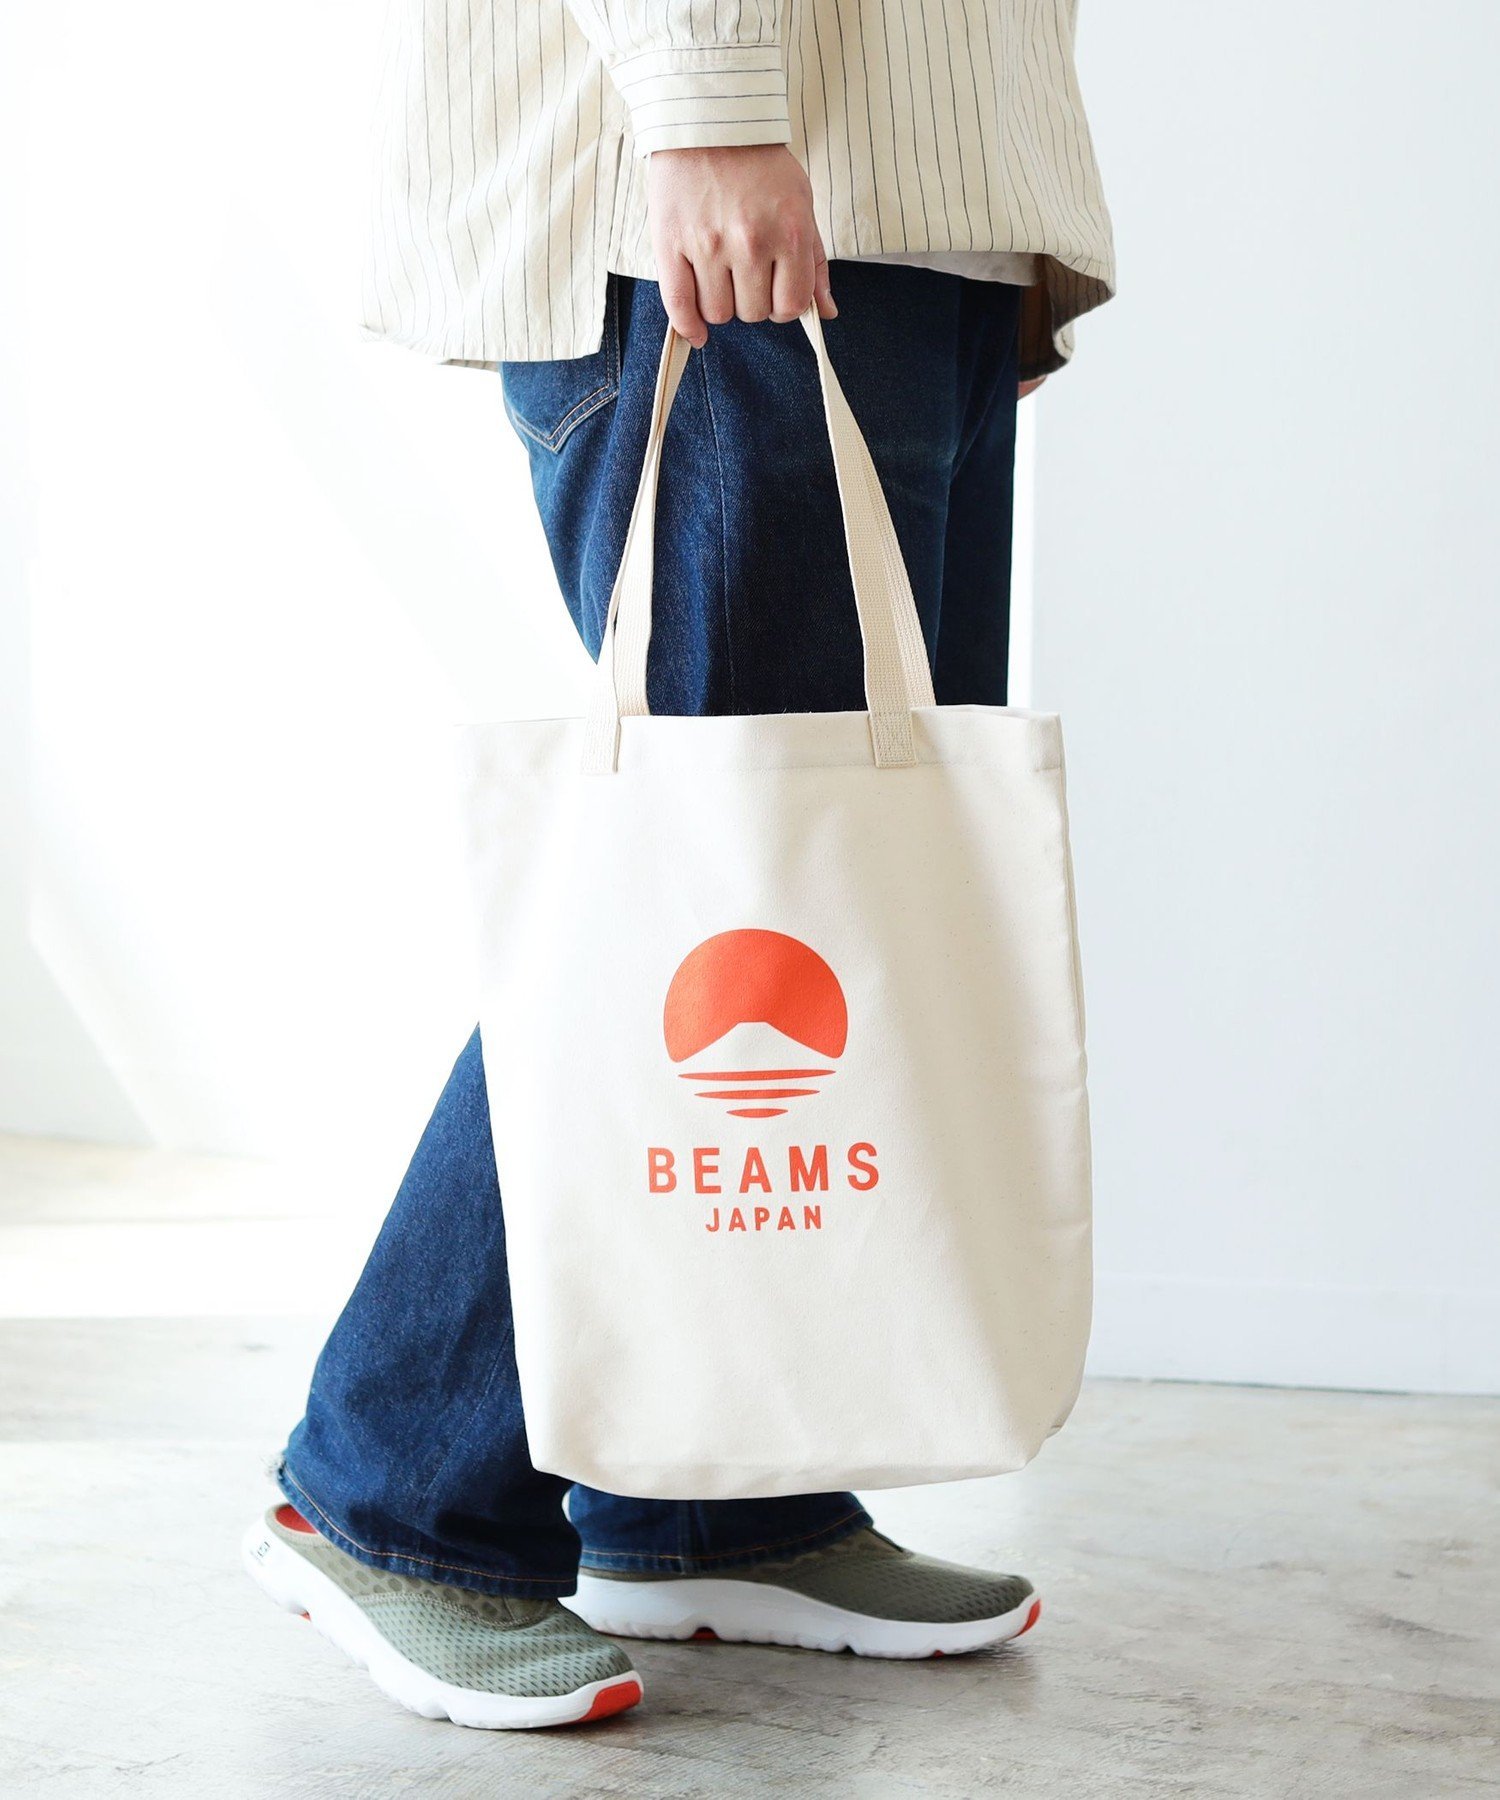 BEAMS トートバッグ メンズ BEAMS JAPAN evergreen works * BEAMS JAPAN / 別注 ビームス ジャパン ロゴ トートバッグ ビームス ジャパン バッグ その他のバッグ オレンジ ブラック【送料無料】